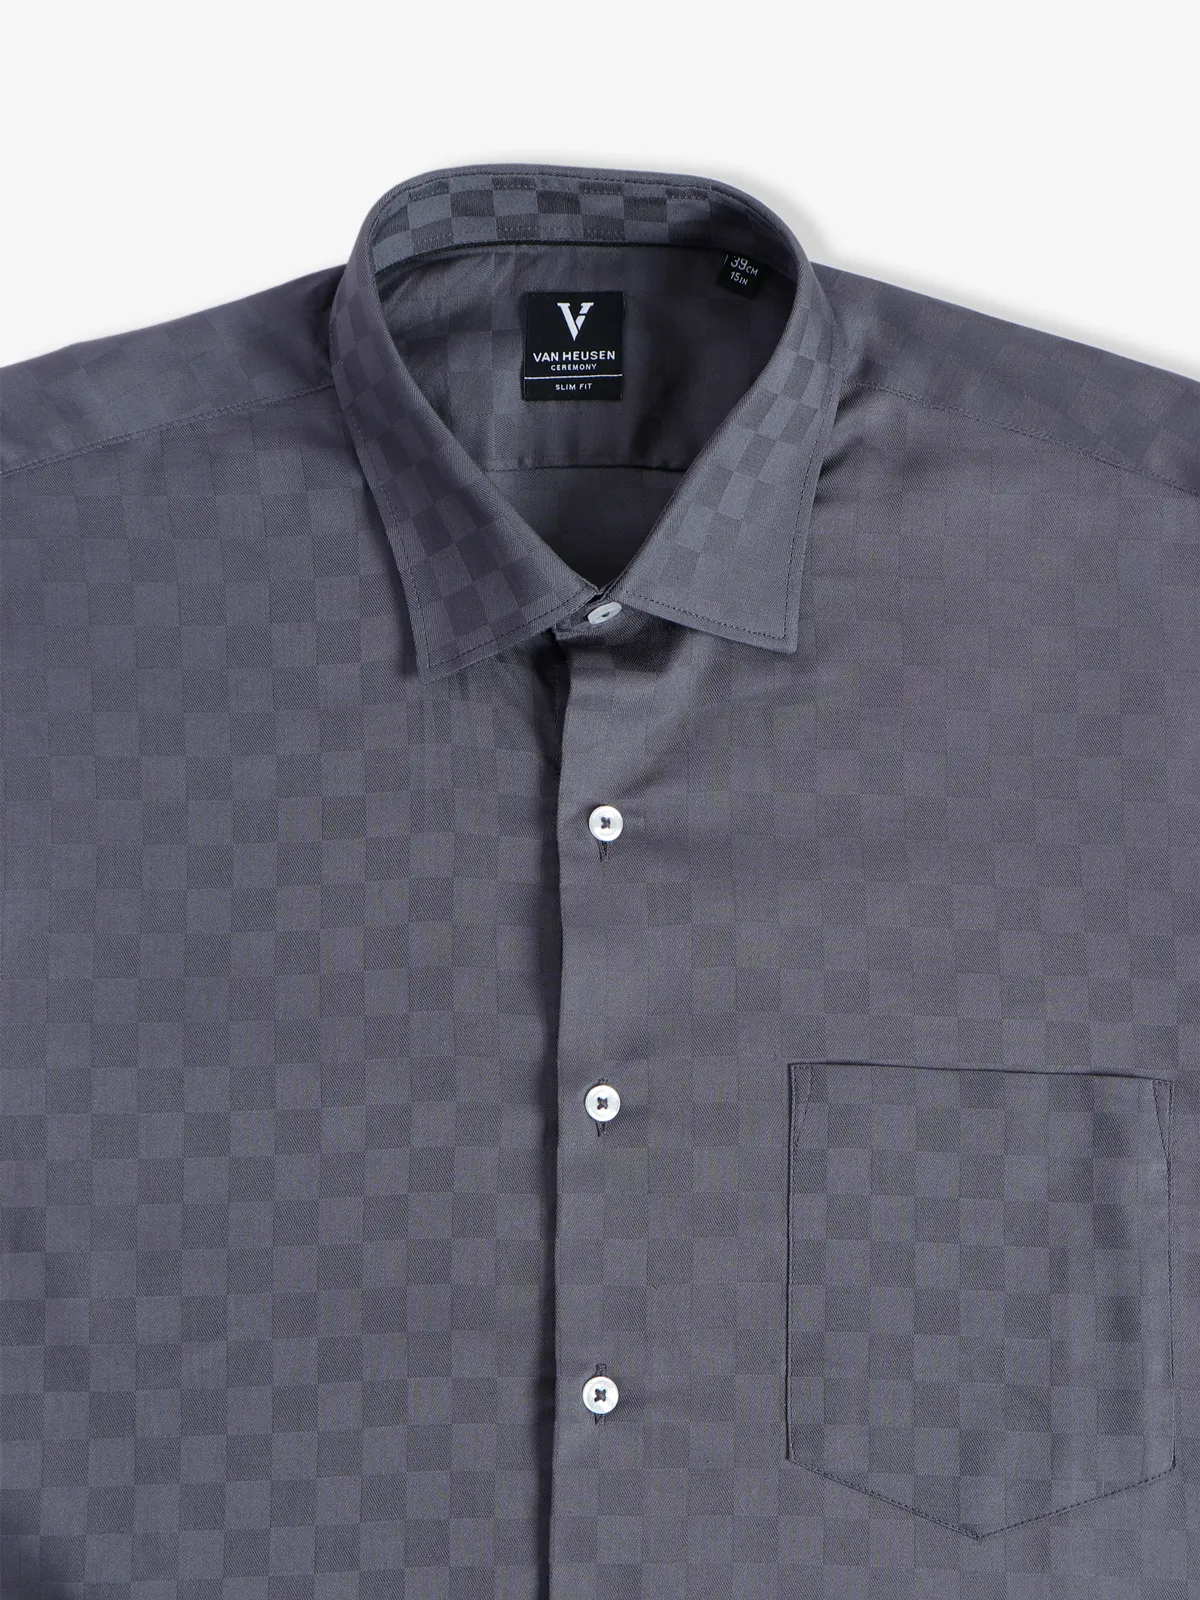 Van Heusen cotton grey full sleeves shirt